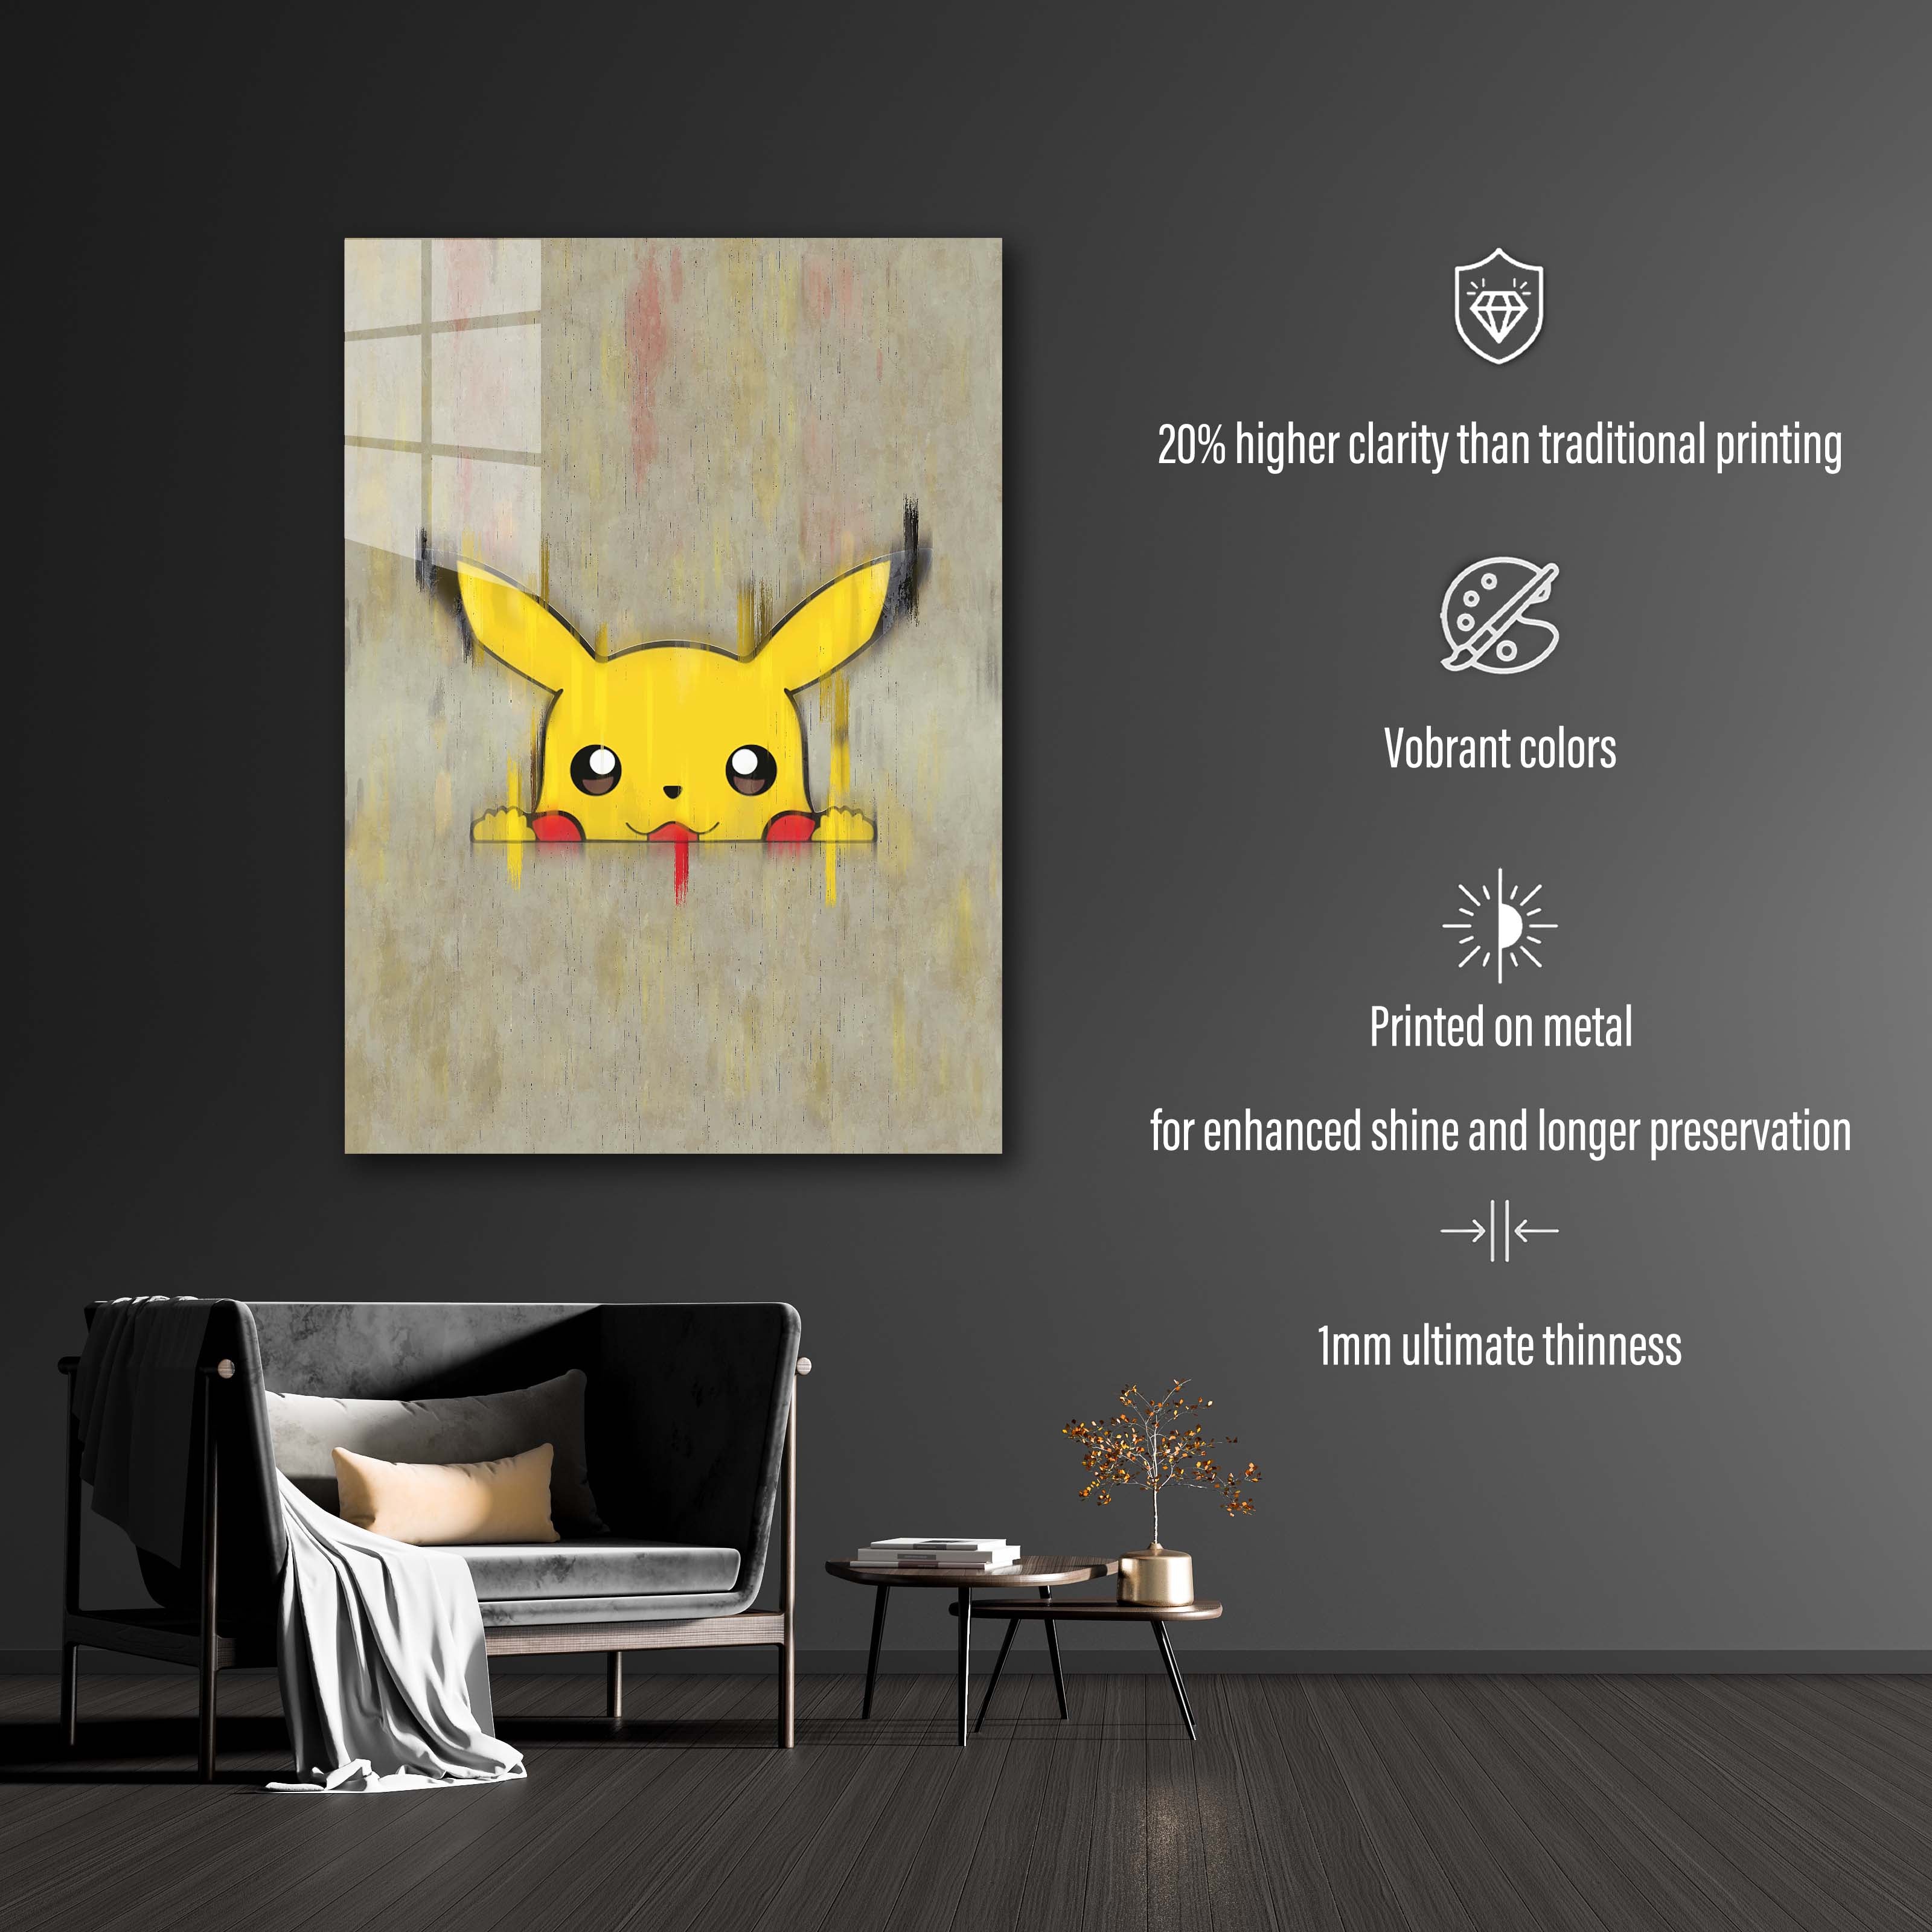 Peeping Pikachu-designed by @rizal.az